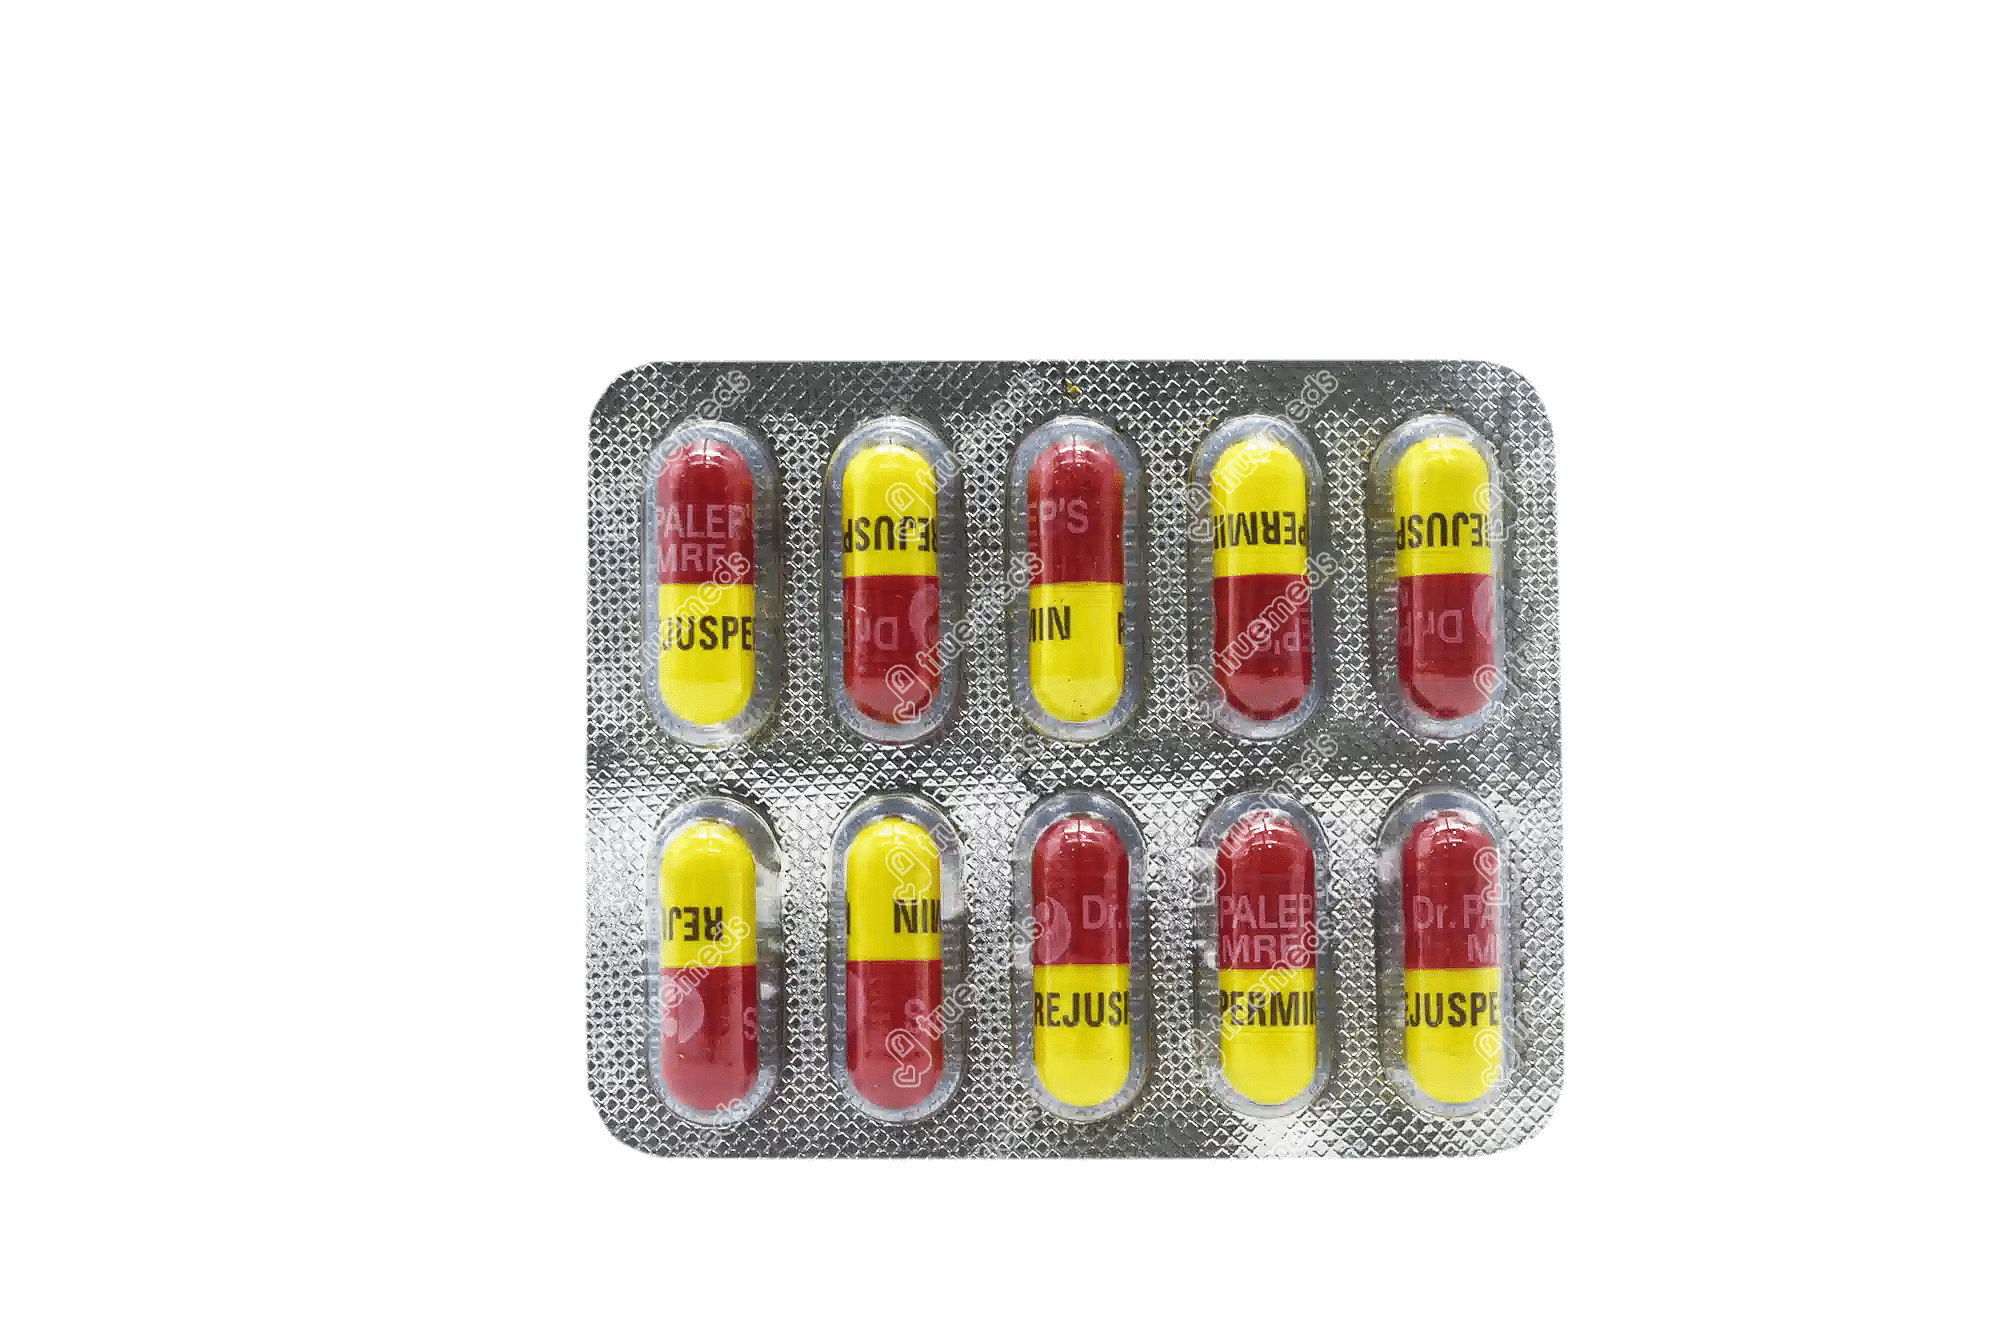 Rejuspermin Capsule 10 Uses Side Effects Dosage Price Truemeds 8243